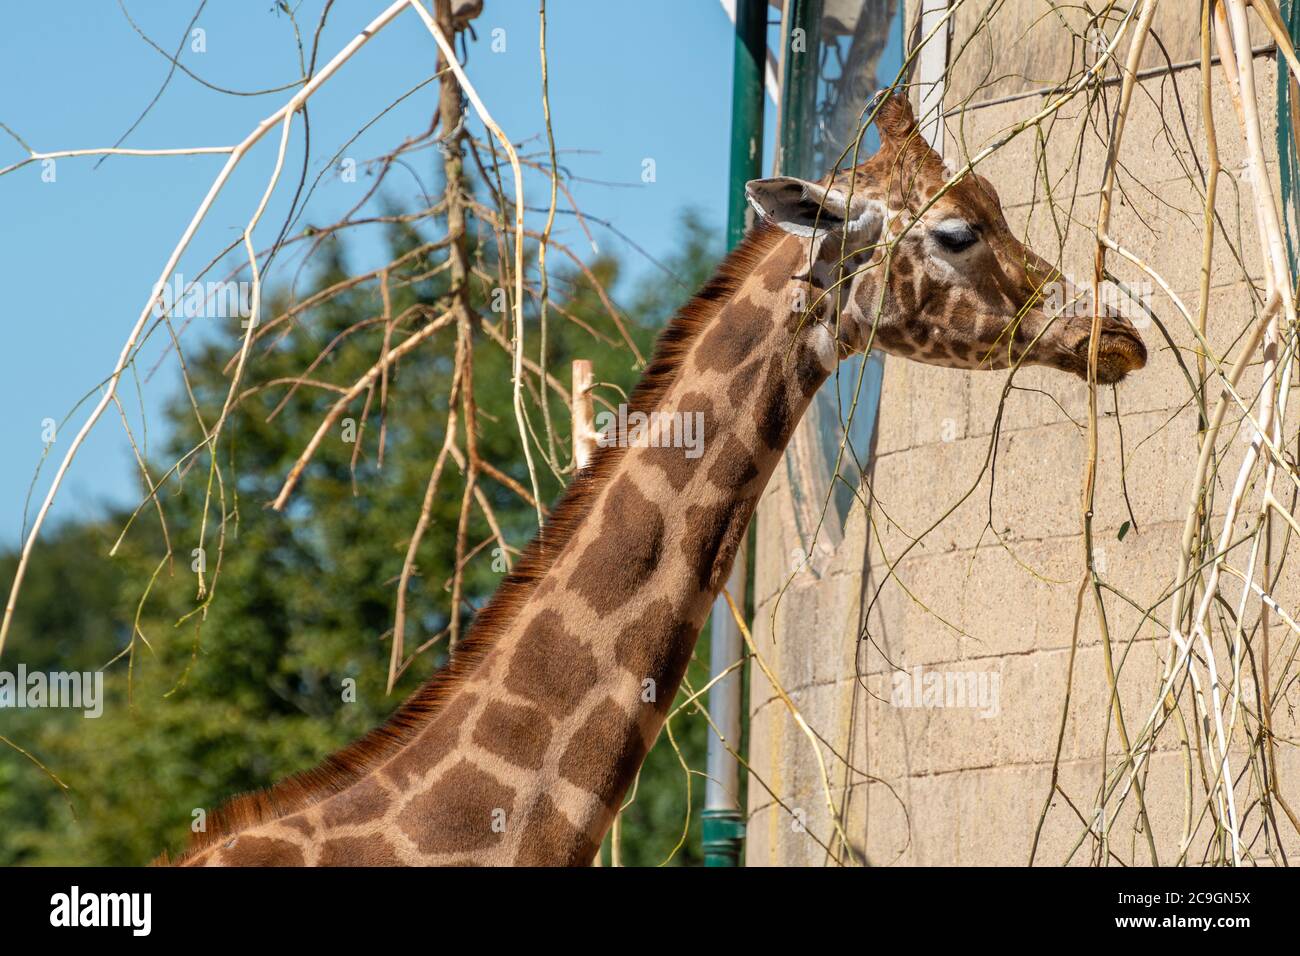 Girafe de Rothschild (Giraffa camelopardalis rothschild) au zoo de Marwell, Royaume-Uni Banque D'Images